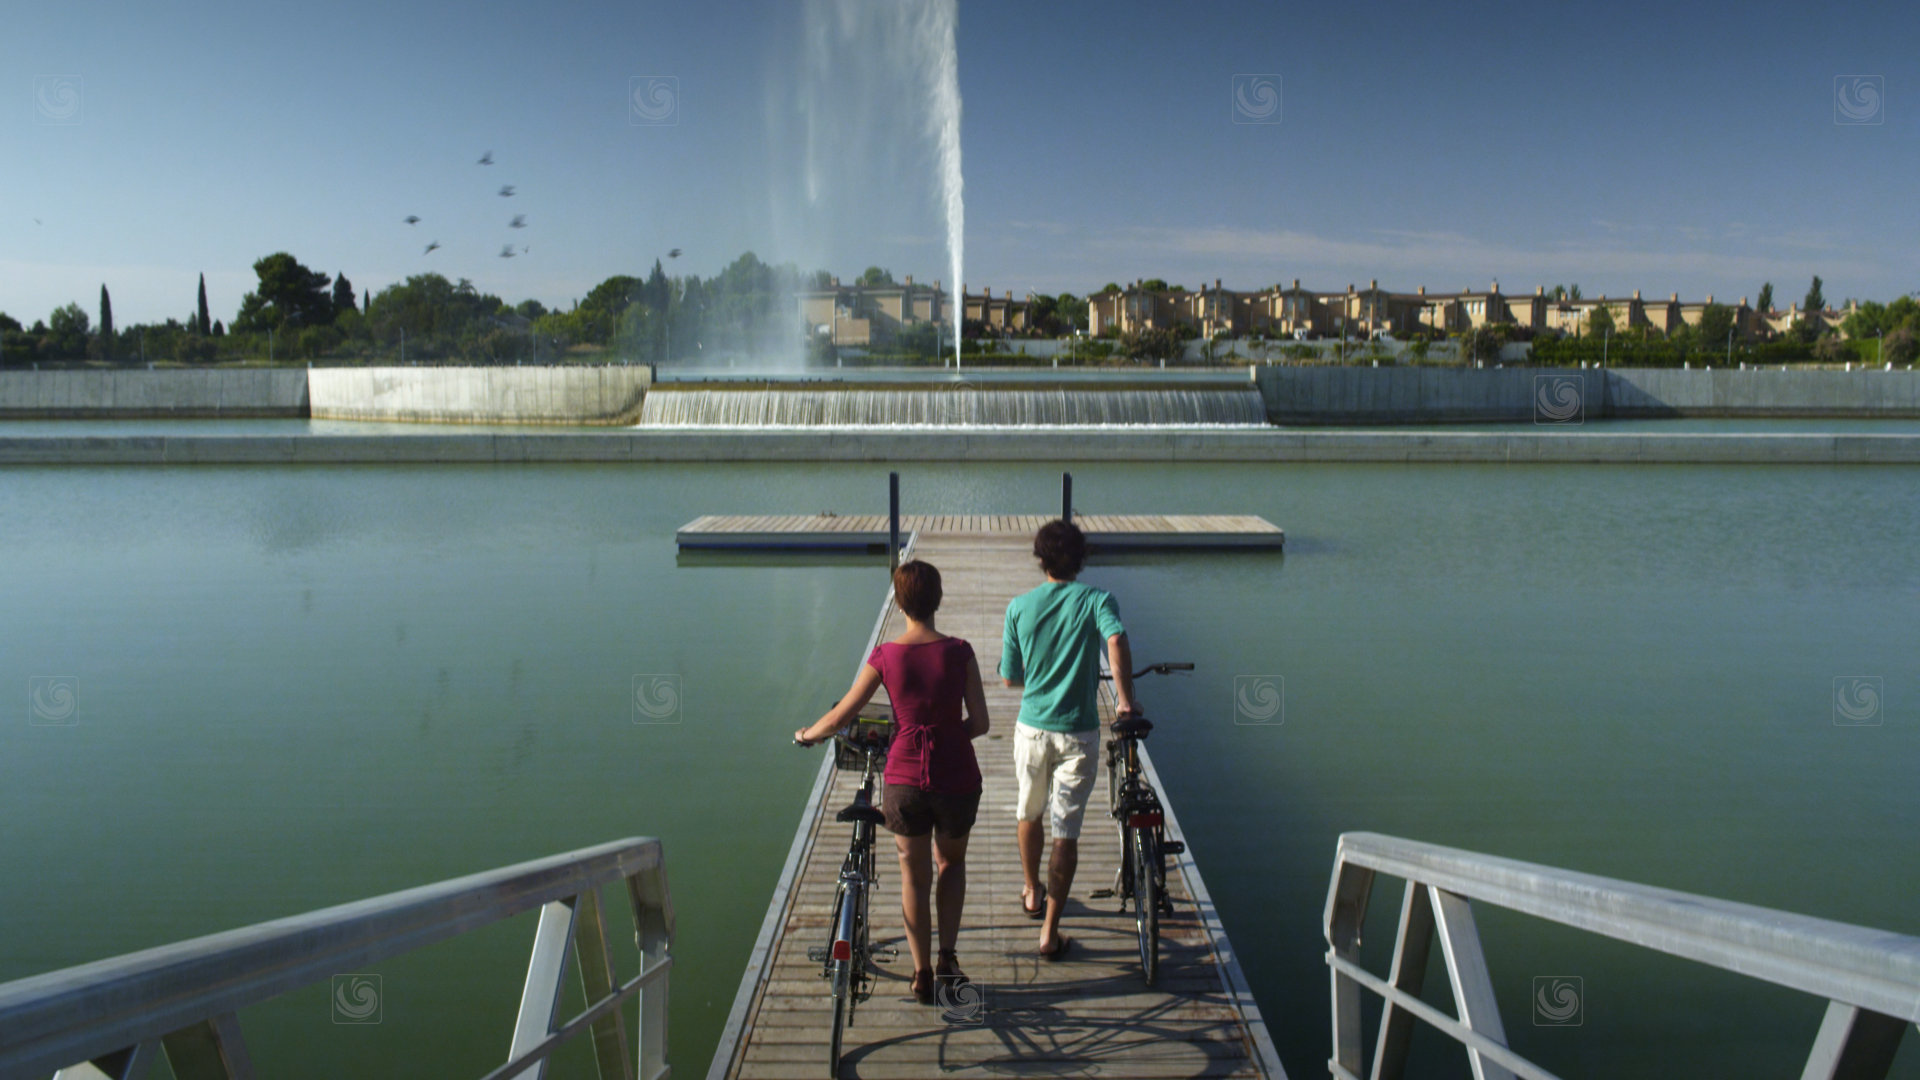 Fotograma de vídeo promocional de Zaragoza, mostrando a una pareja de jóvenes junto a un estanque artificial